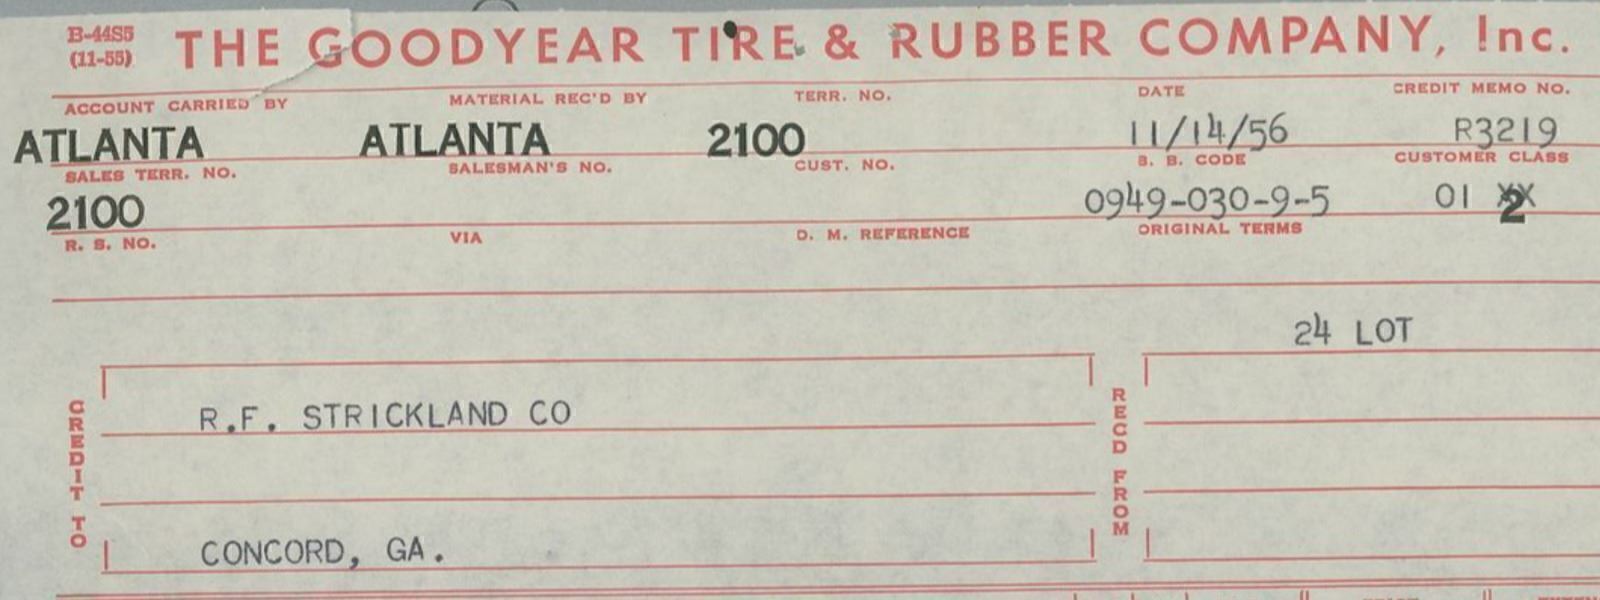 1956 Goodyear Tire & Rubber Company, Inc Piedmont Rd Atlanta GA Invoice 416